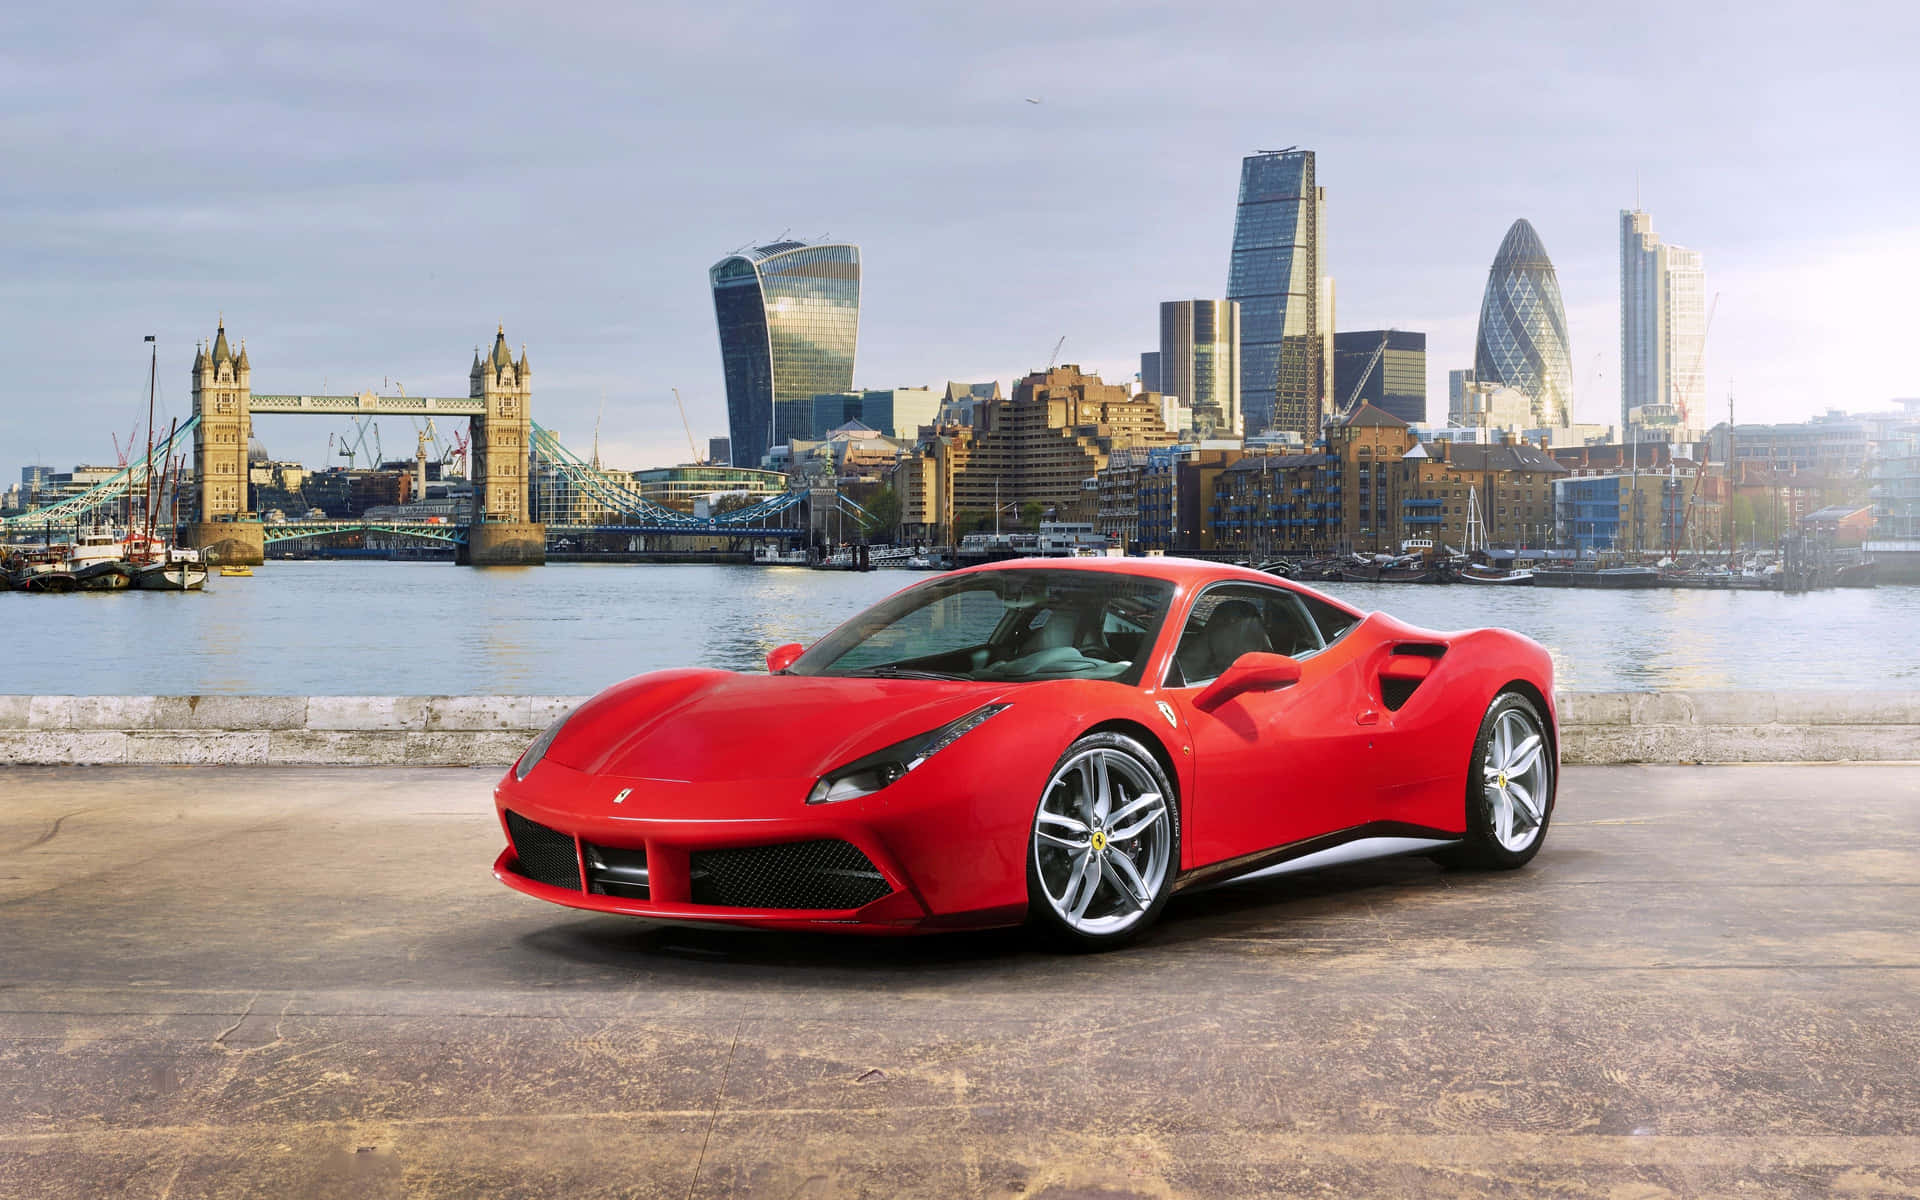 The sleek, stylish Ferrari - a four-wheel dream machine